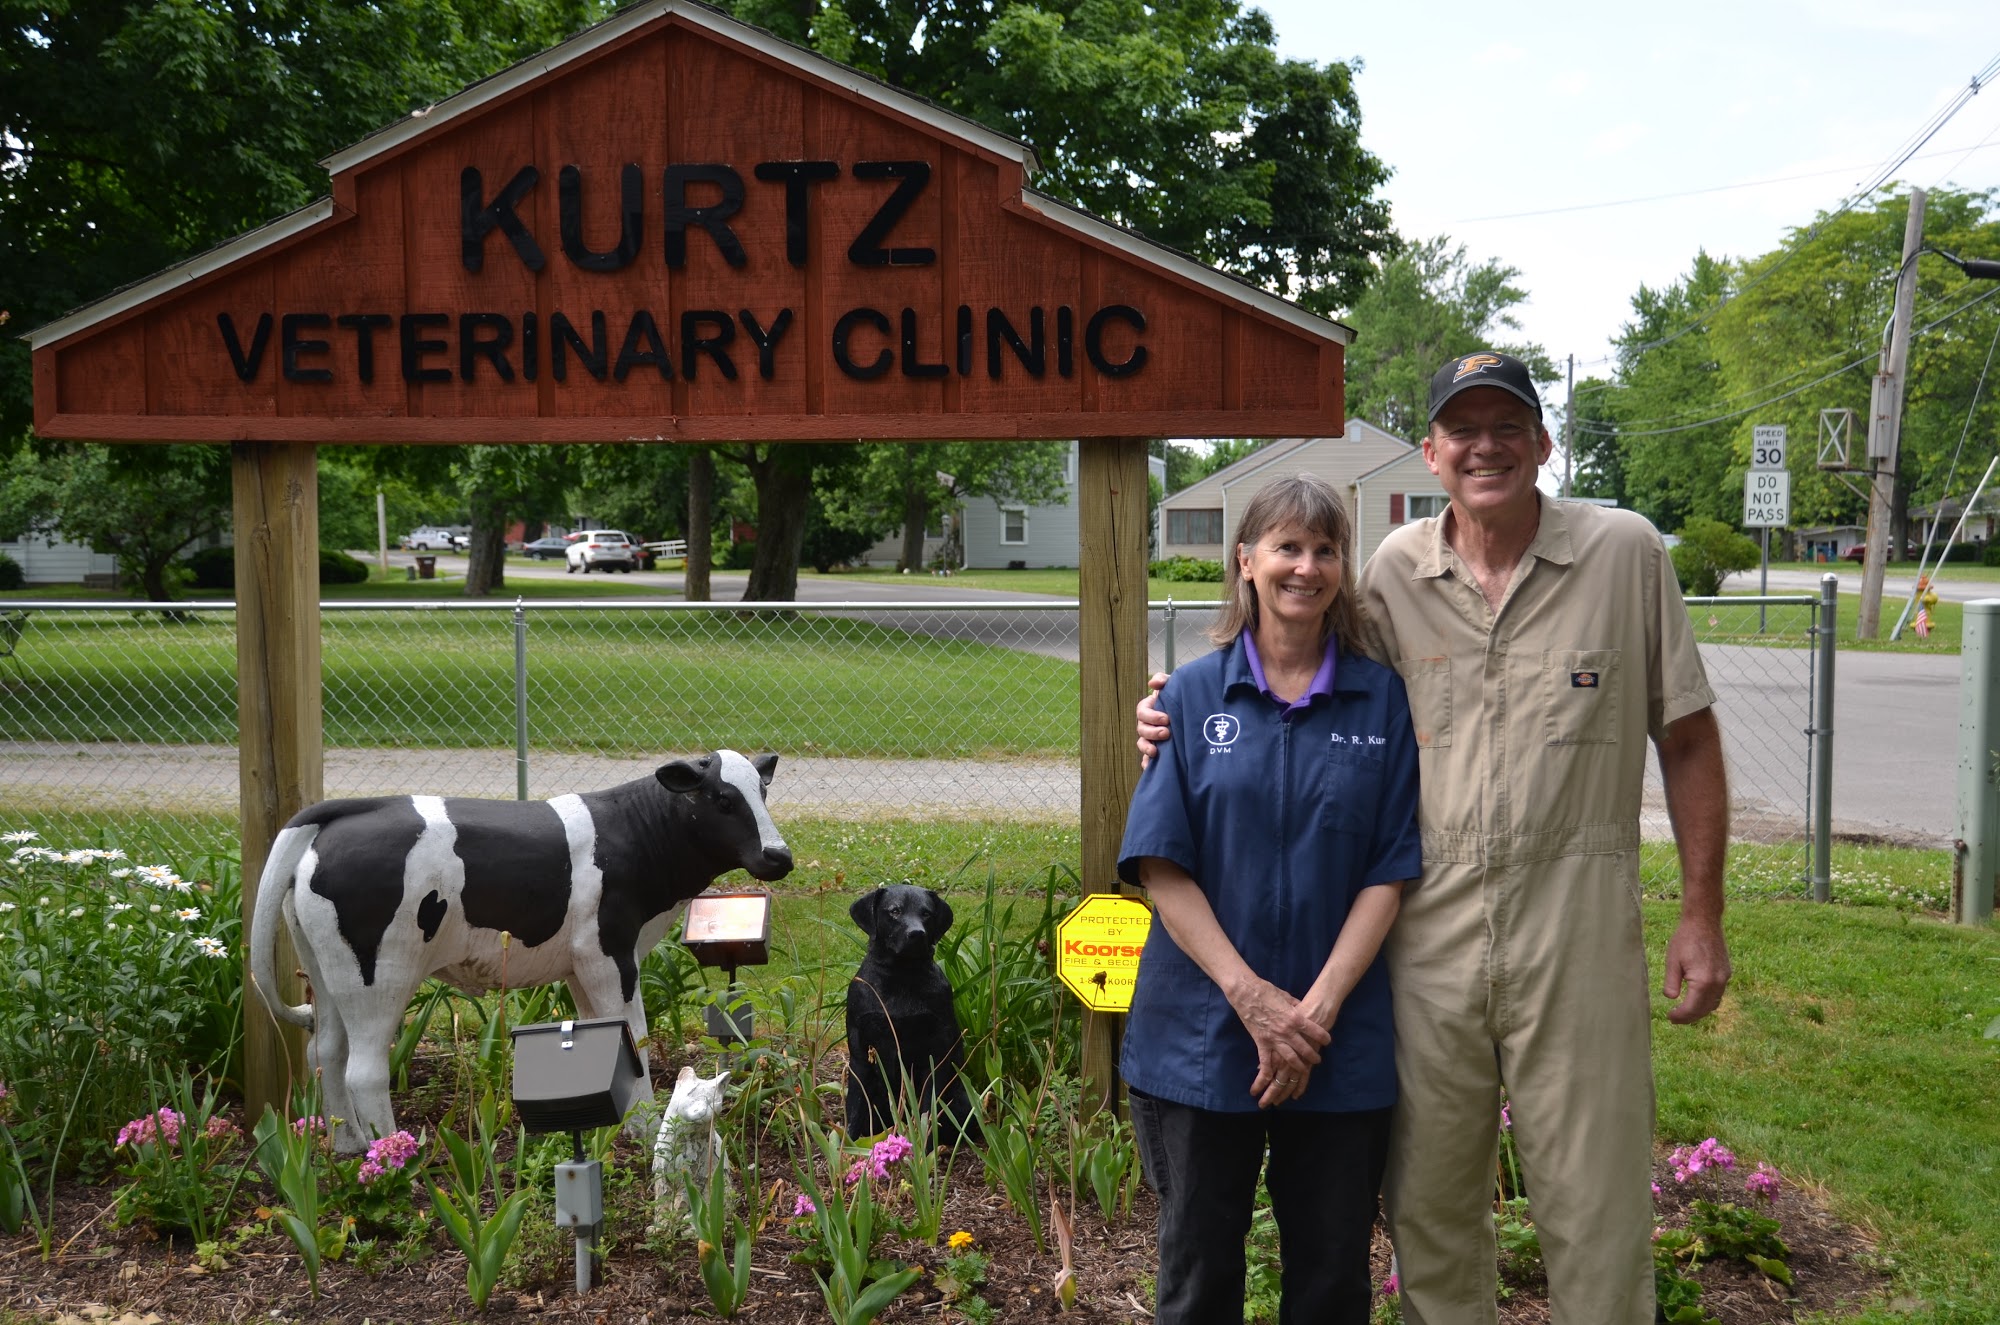 Kurtz Veterinary Clinic